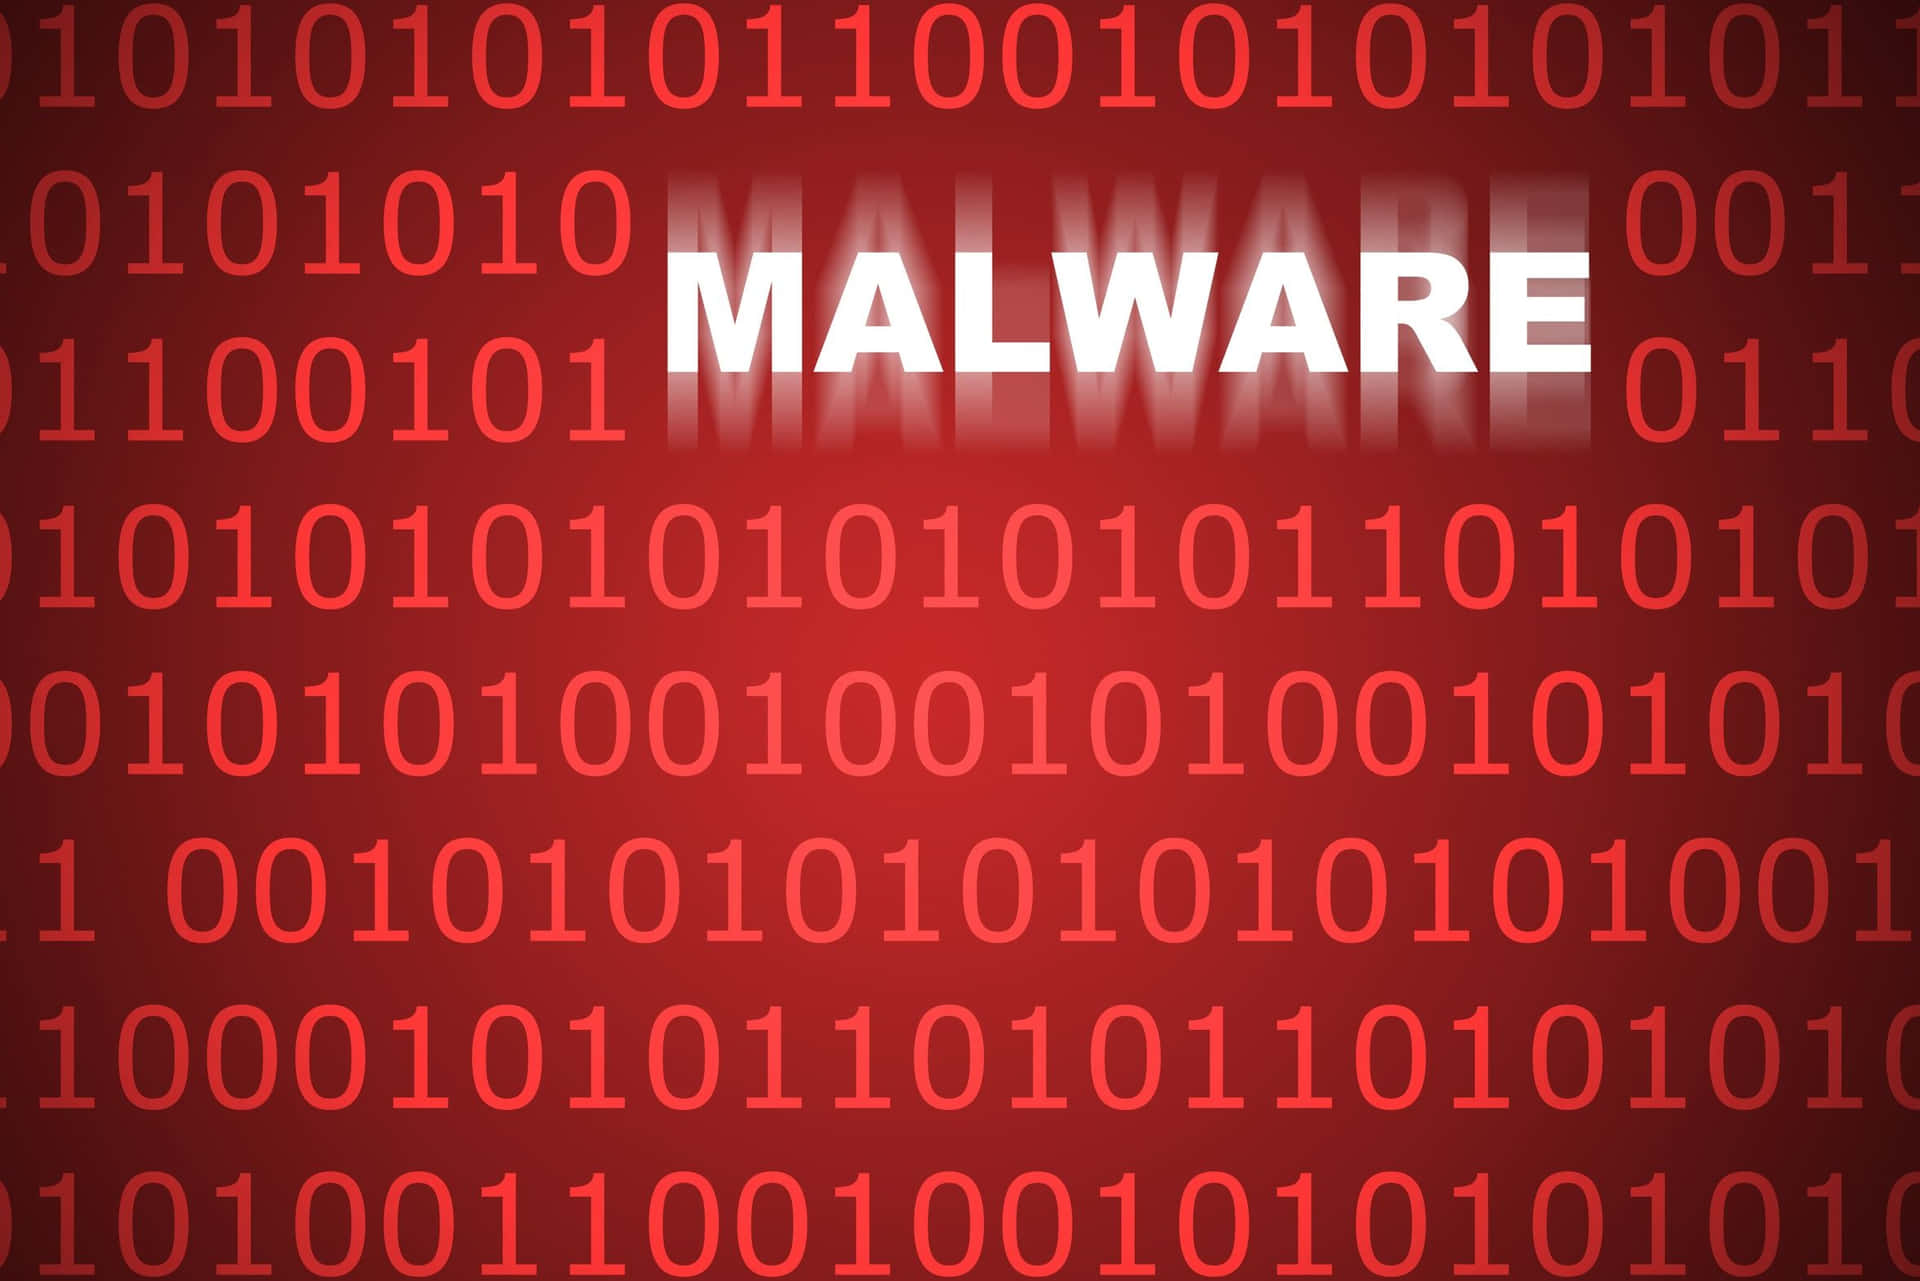 100+] Malware Wallpapers | Wallpapers.com